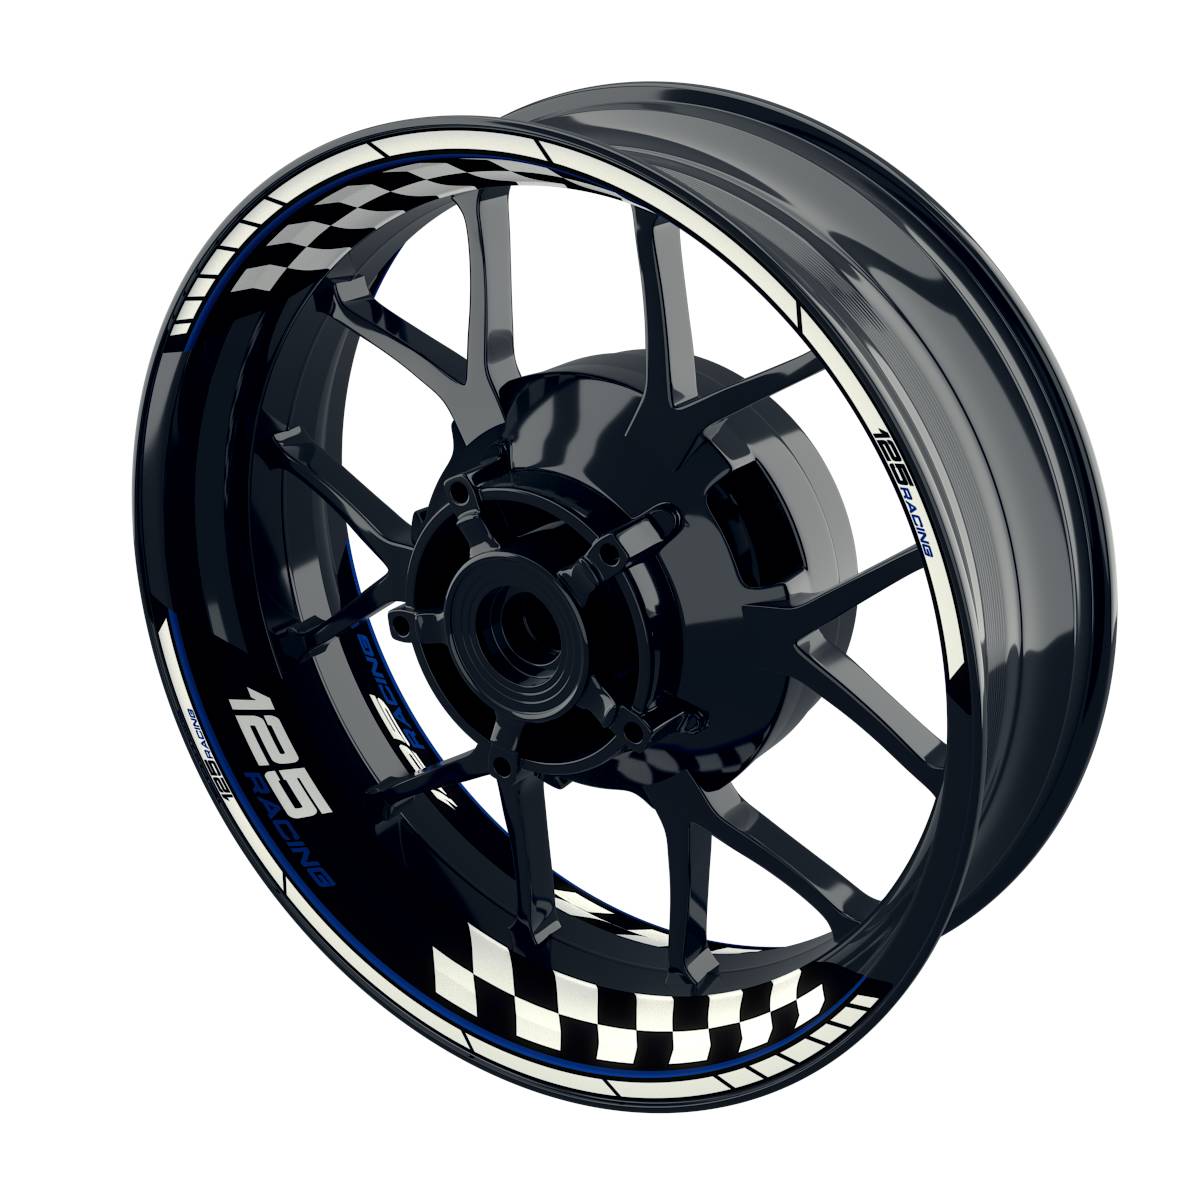 Racing 125 Grid Rim Decals Wheelsticker Premium splitted